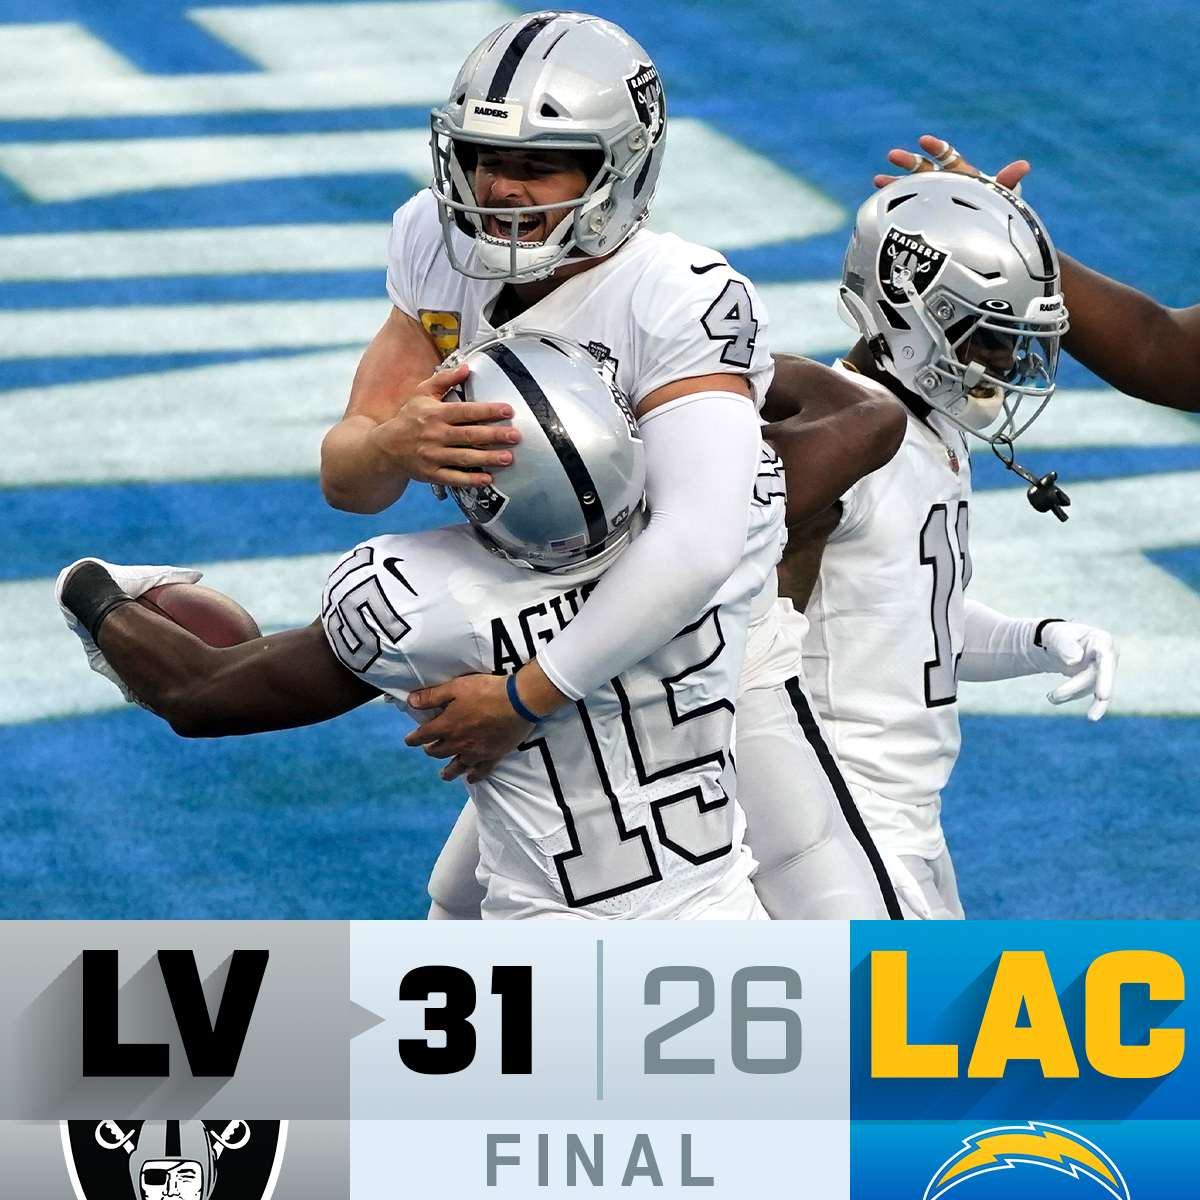 NFL on X: FINAL: The @Raiders improve to 5-3! #LVvsLAC